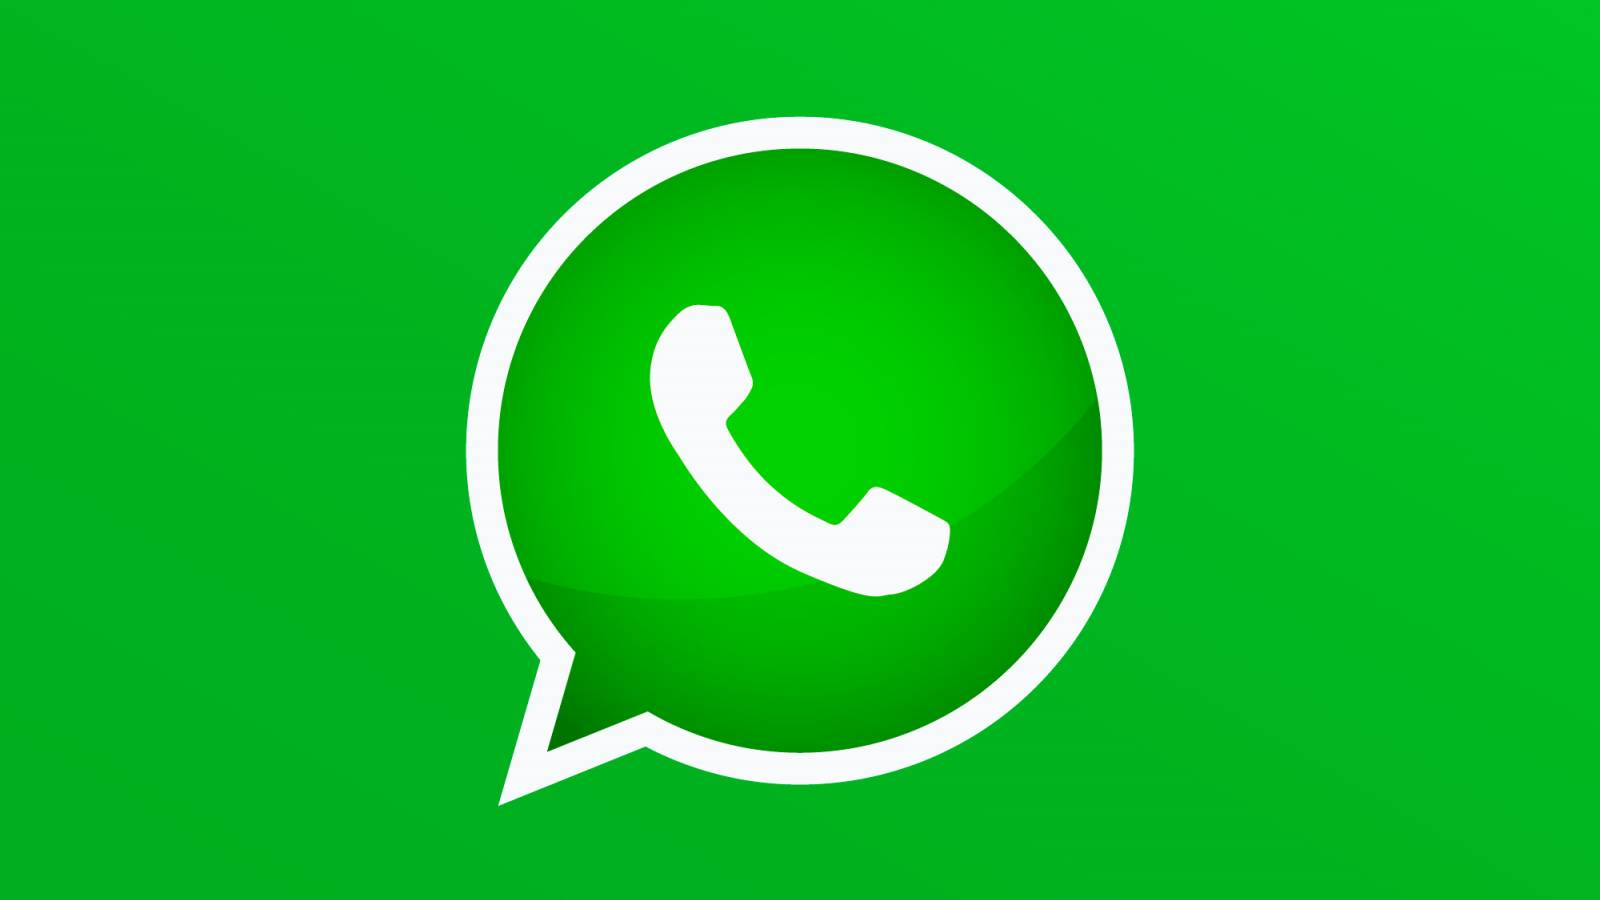 WhatsApp-Ungeduld